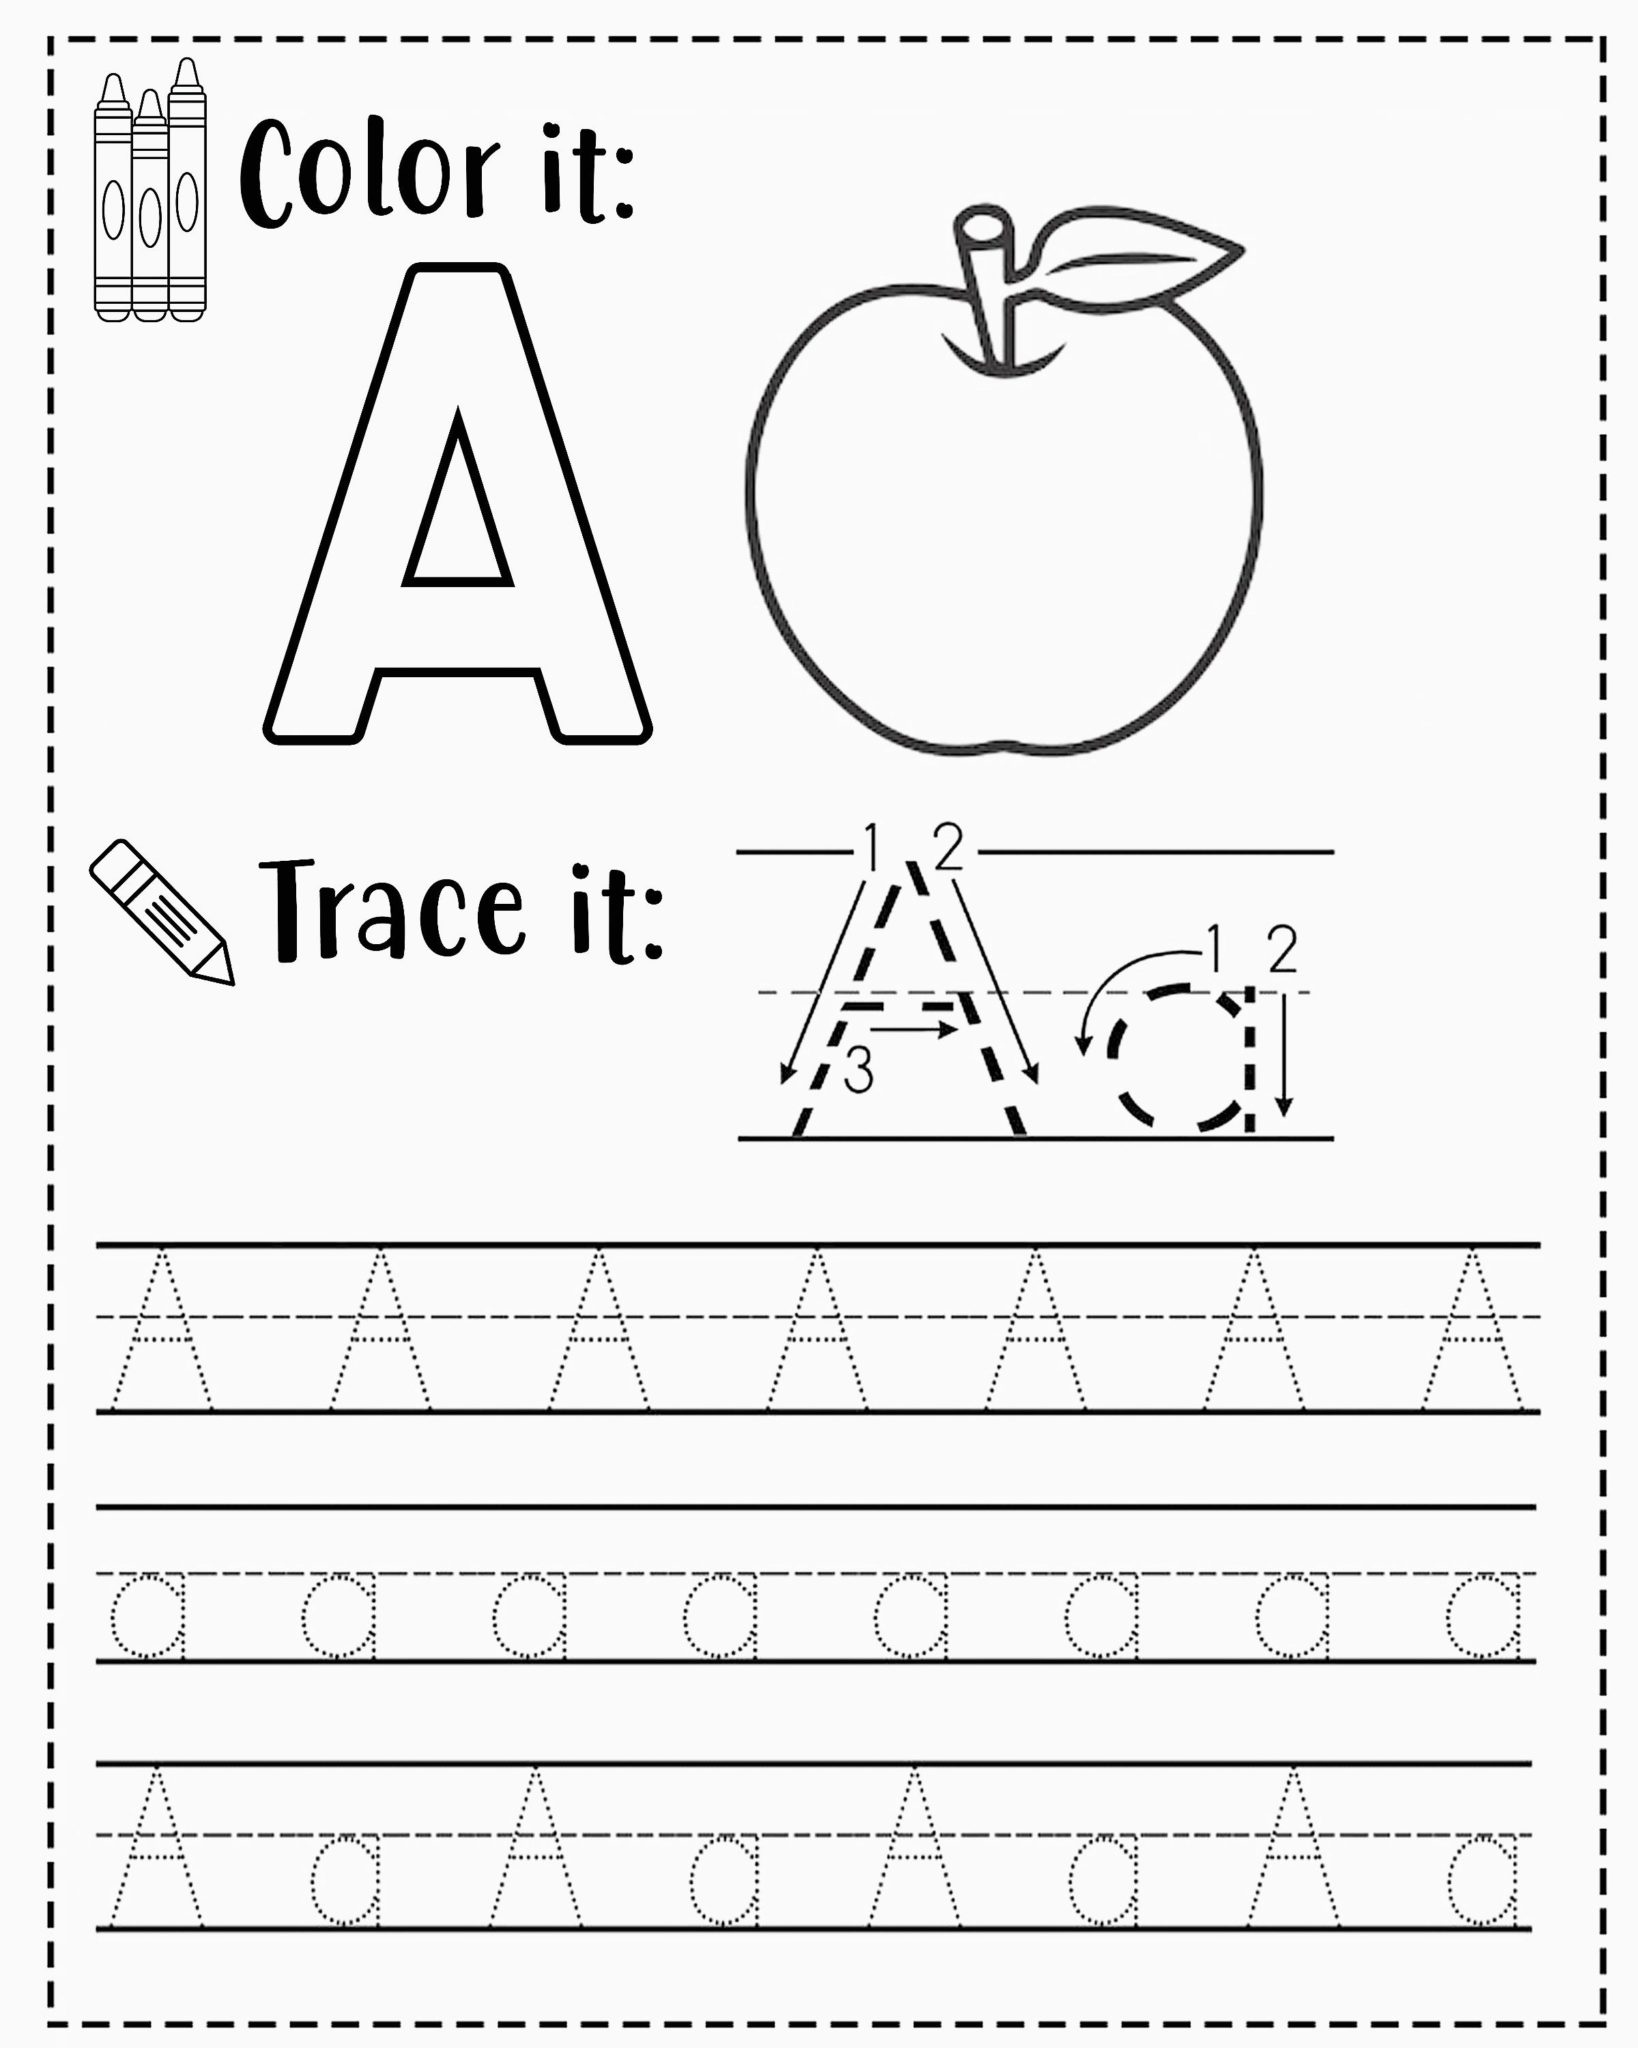 tracing-alphabet-preschool-worksheets-alphabet-tracing-worksheets